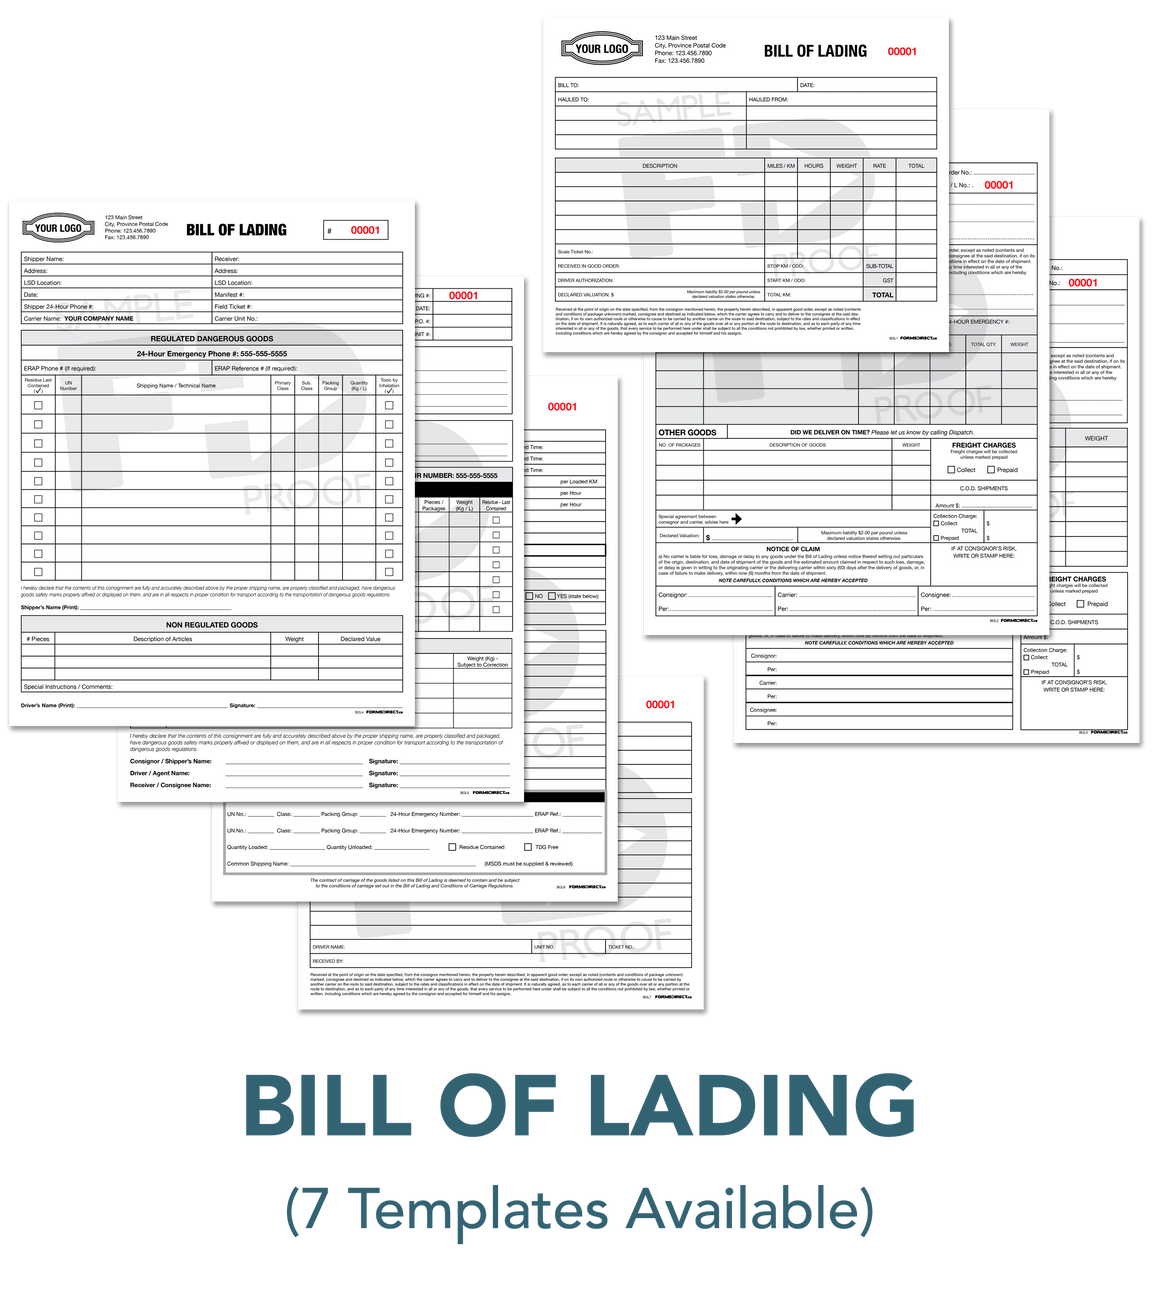 bill-of-lading-form-custom-carbonless-ncr-printing